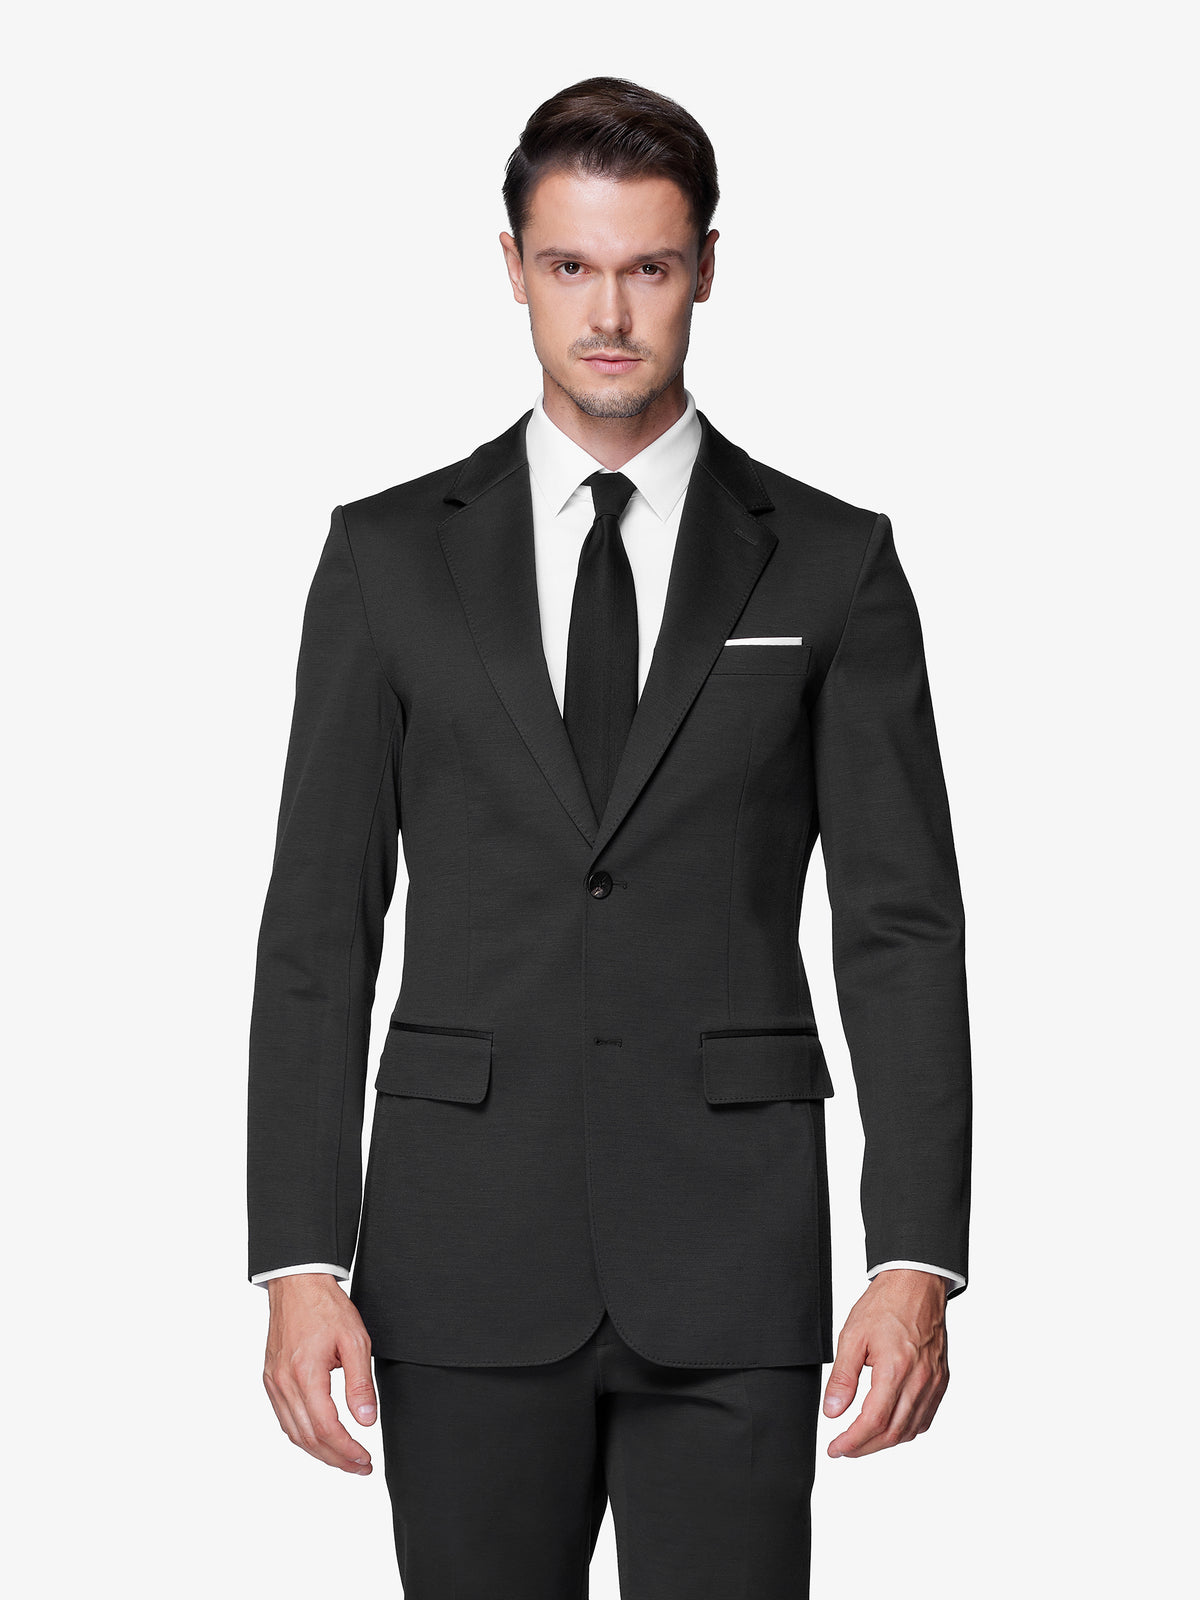 Slim Fit Suit Dark color black Wool fabric Pinstripe 3 Piece - SKU:  ID#AC-947